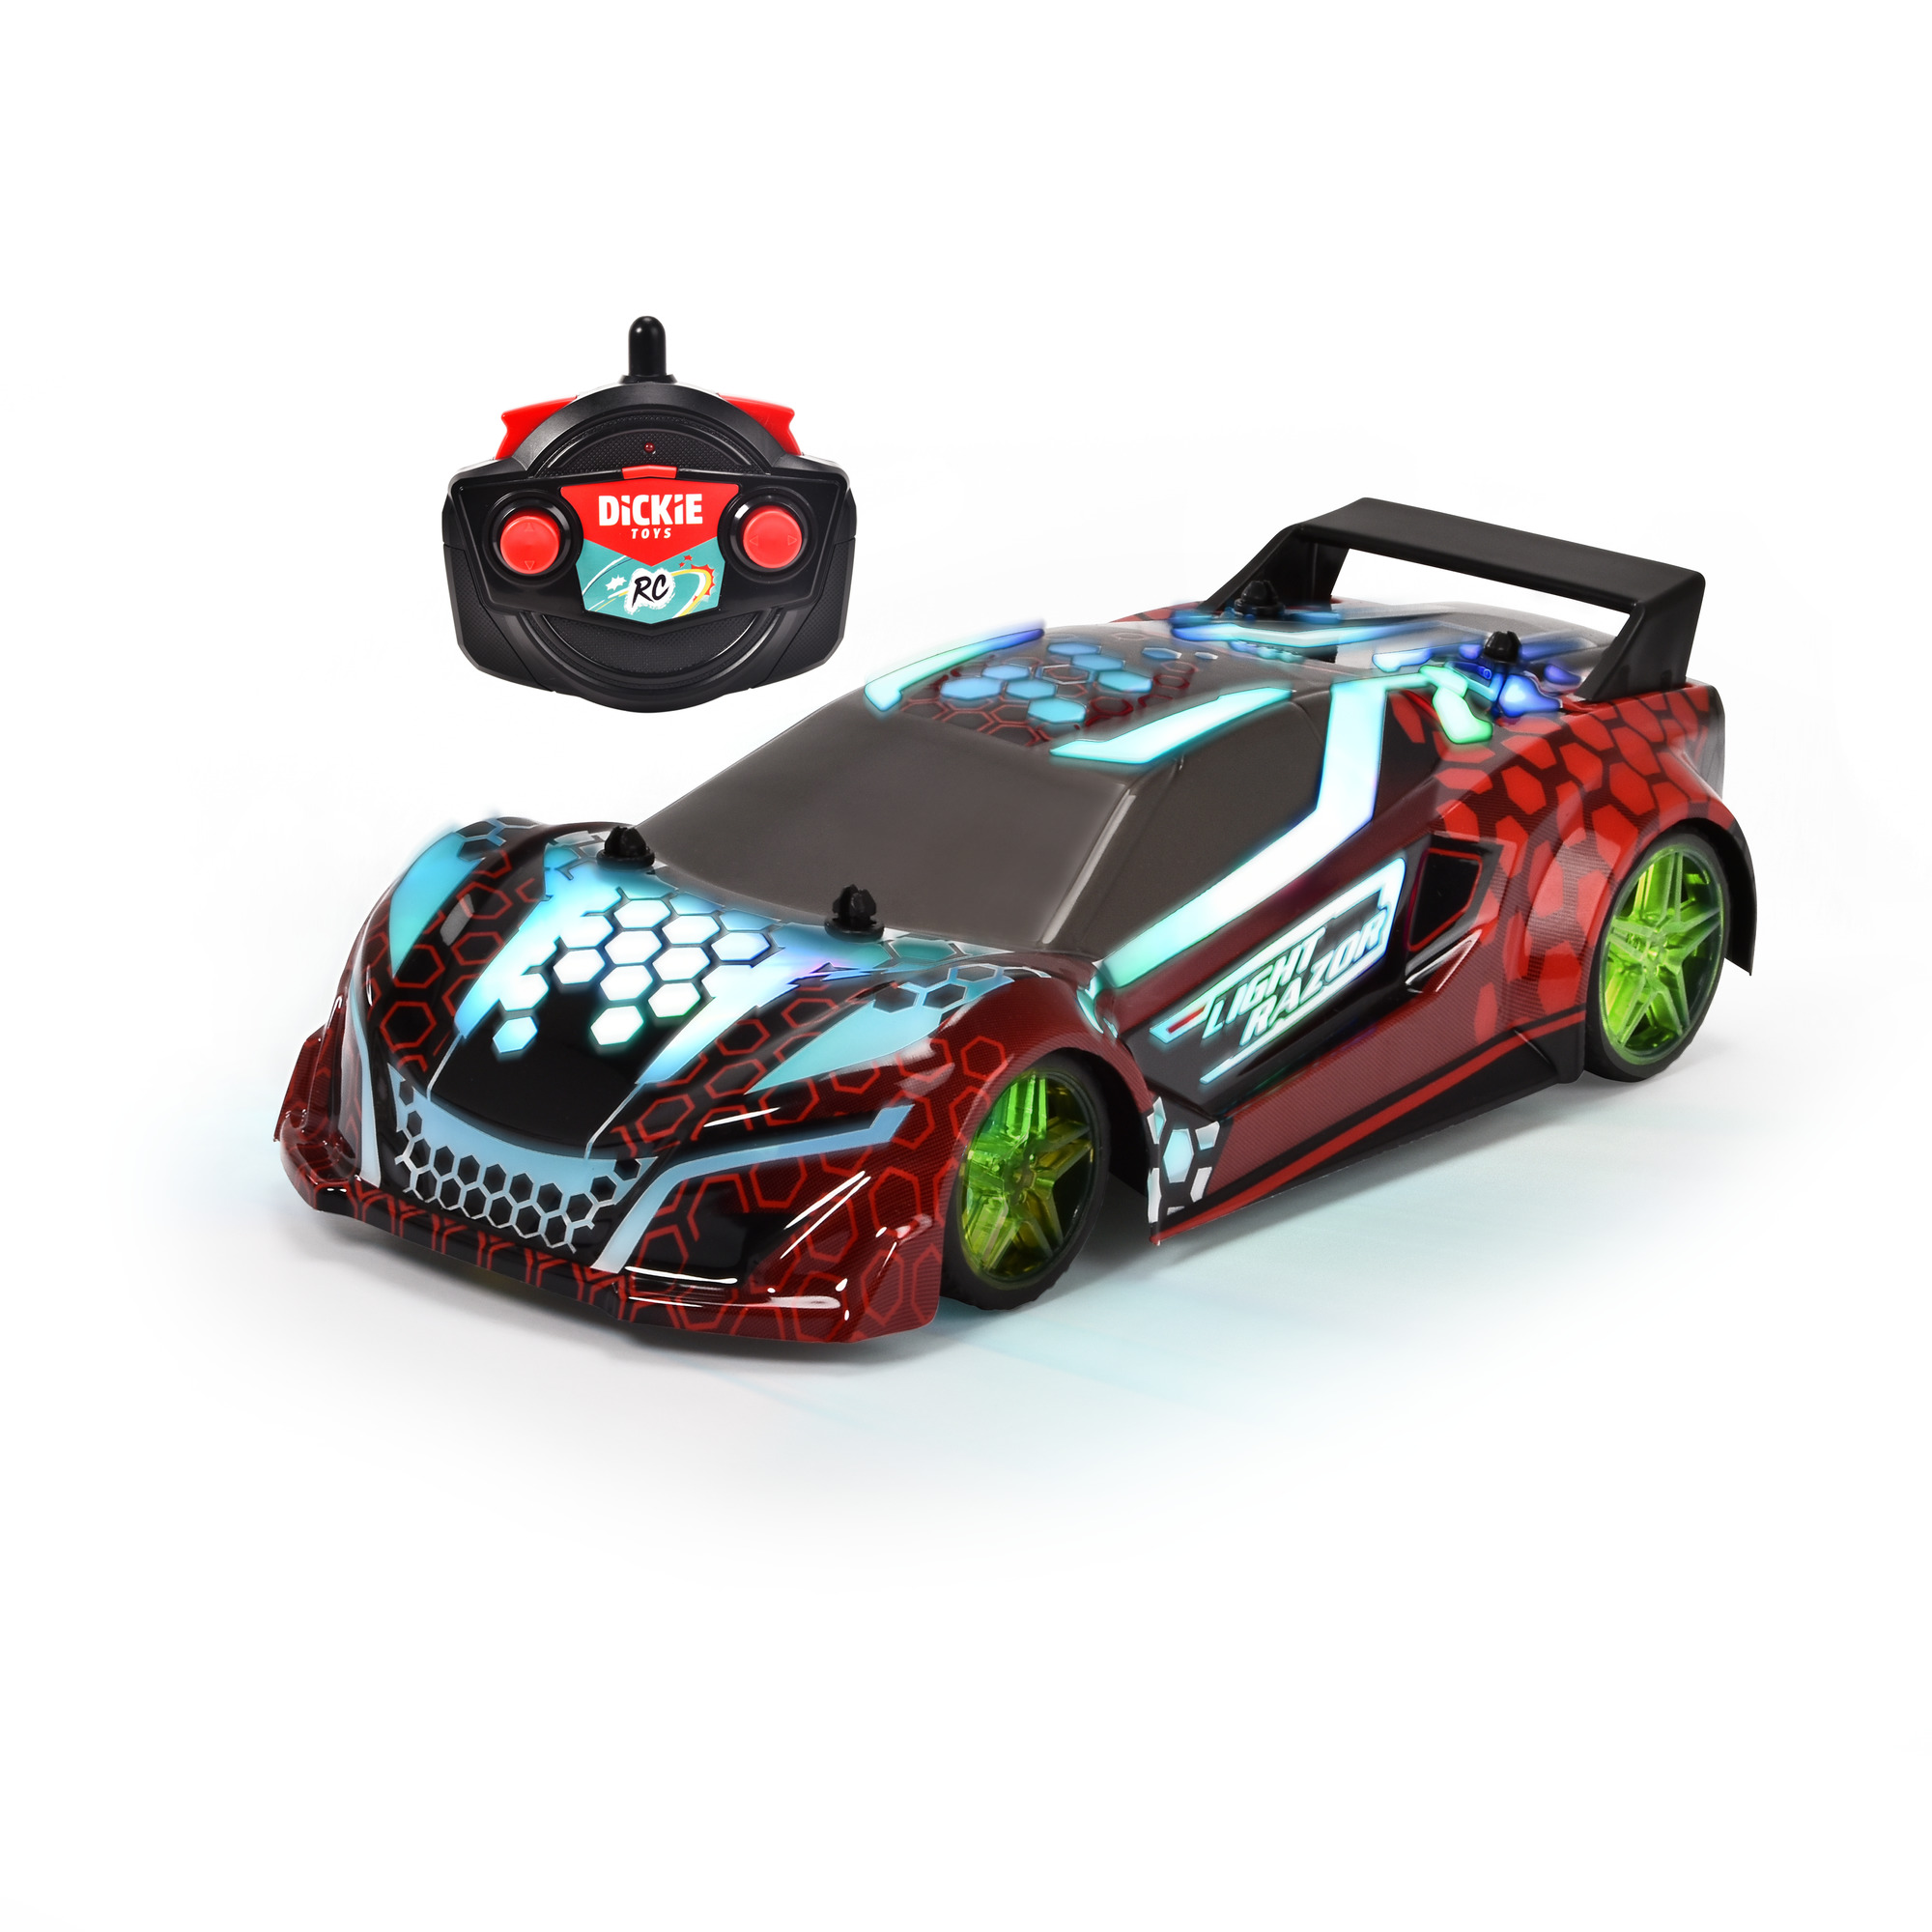 R/C Light Mehrfarbig Spielzeugauto R/C Razor DICKIE-TOYS